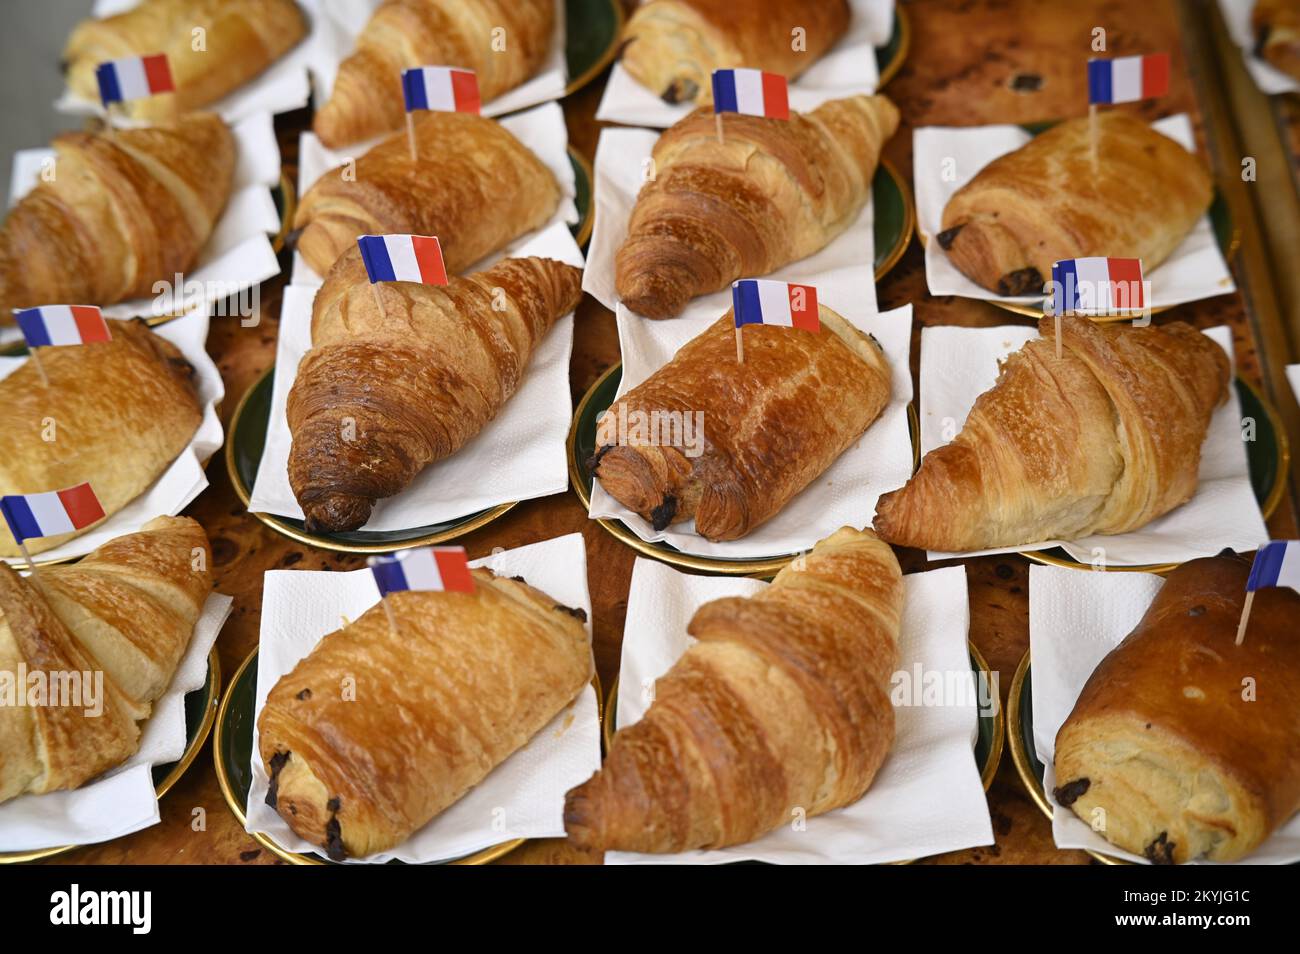 Parigi. Francia. Croissant e pain au chocolate in mostra presso un pâtisserie francese. Foto Stock